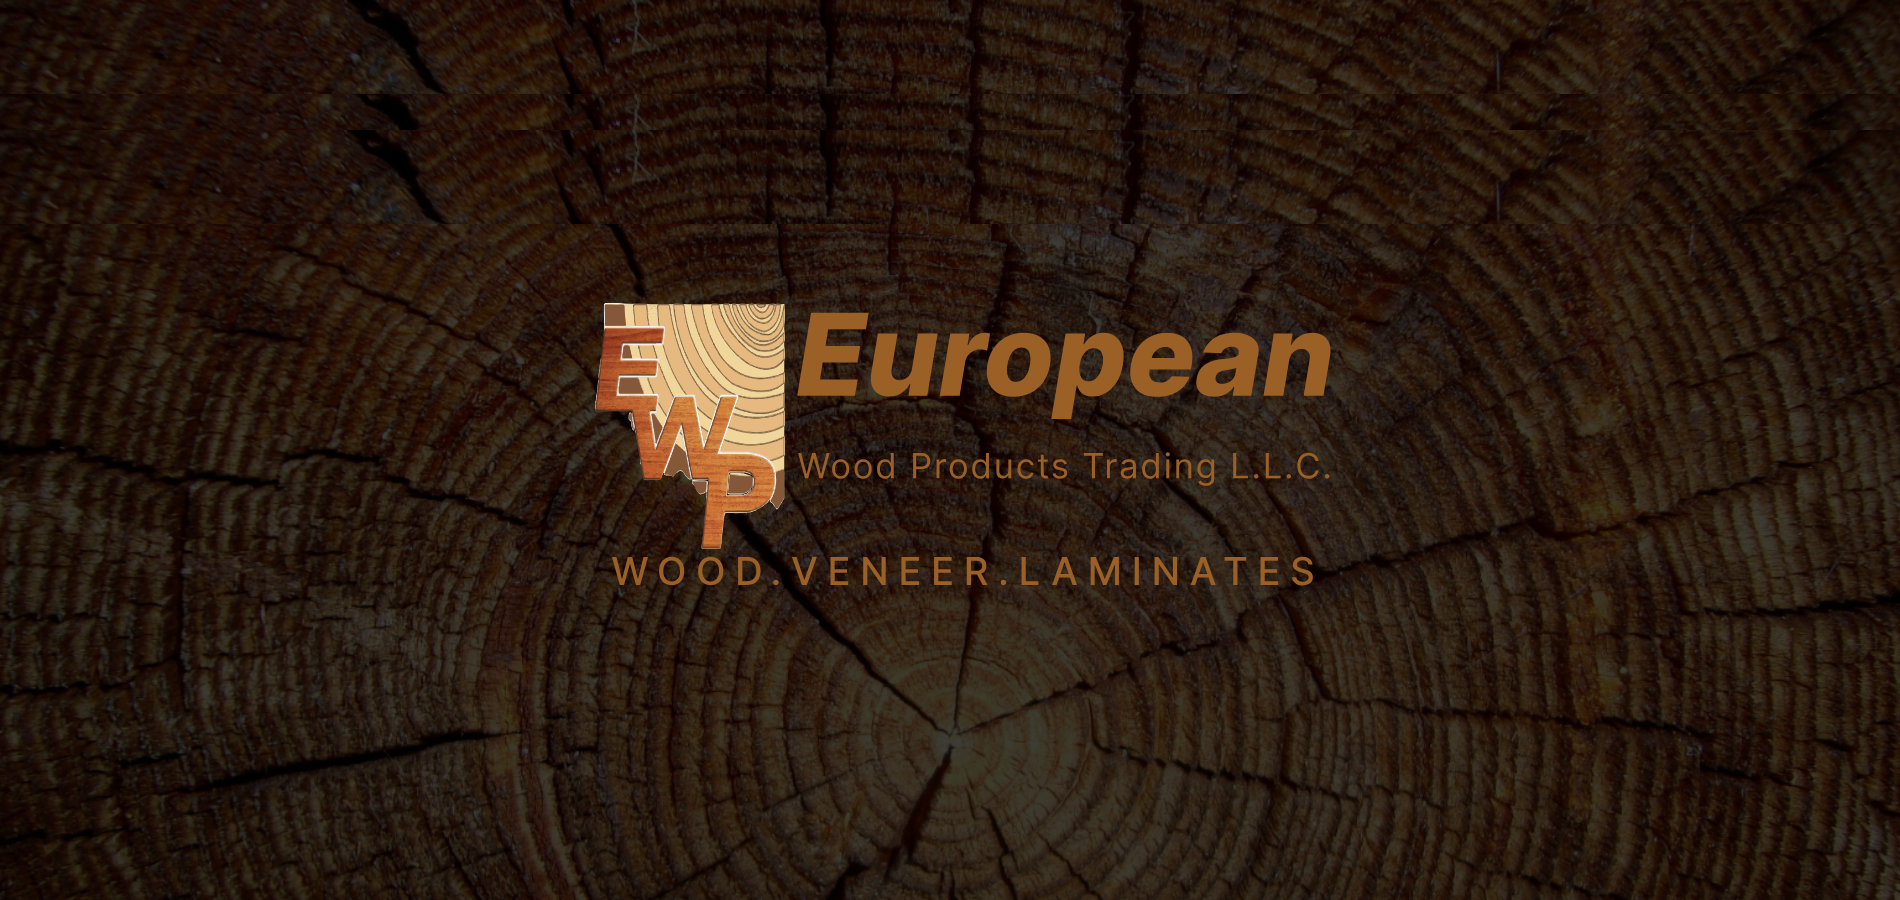 European Wood Products Trading L.L.C.